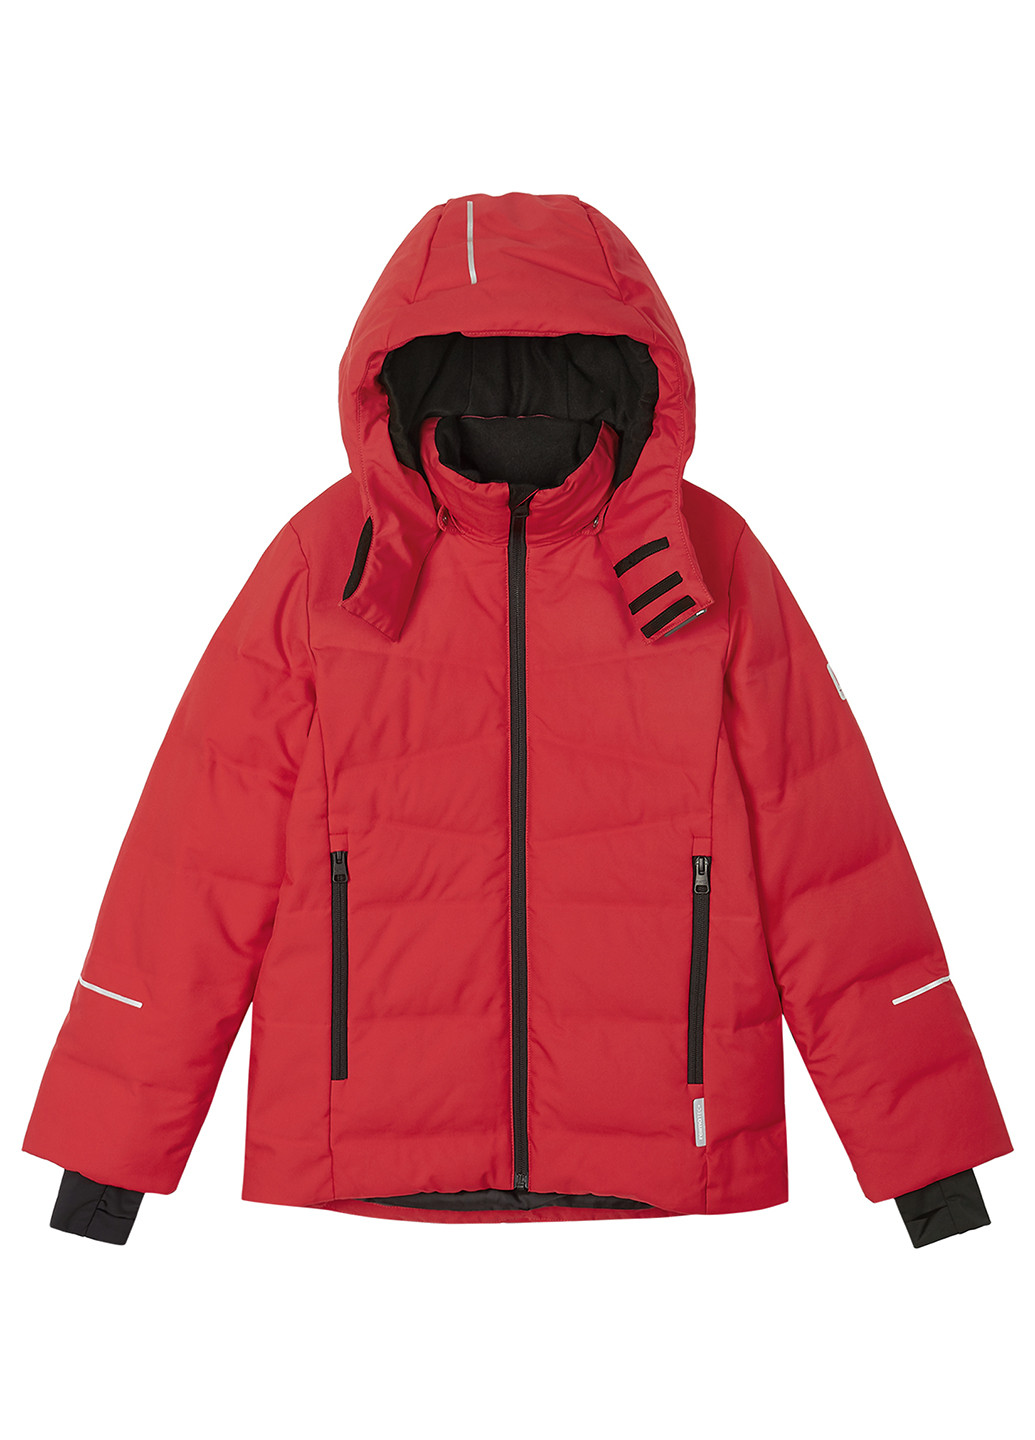 Красная зимняя куртка пуховая Reima Vaattunki